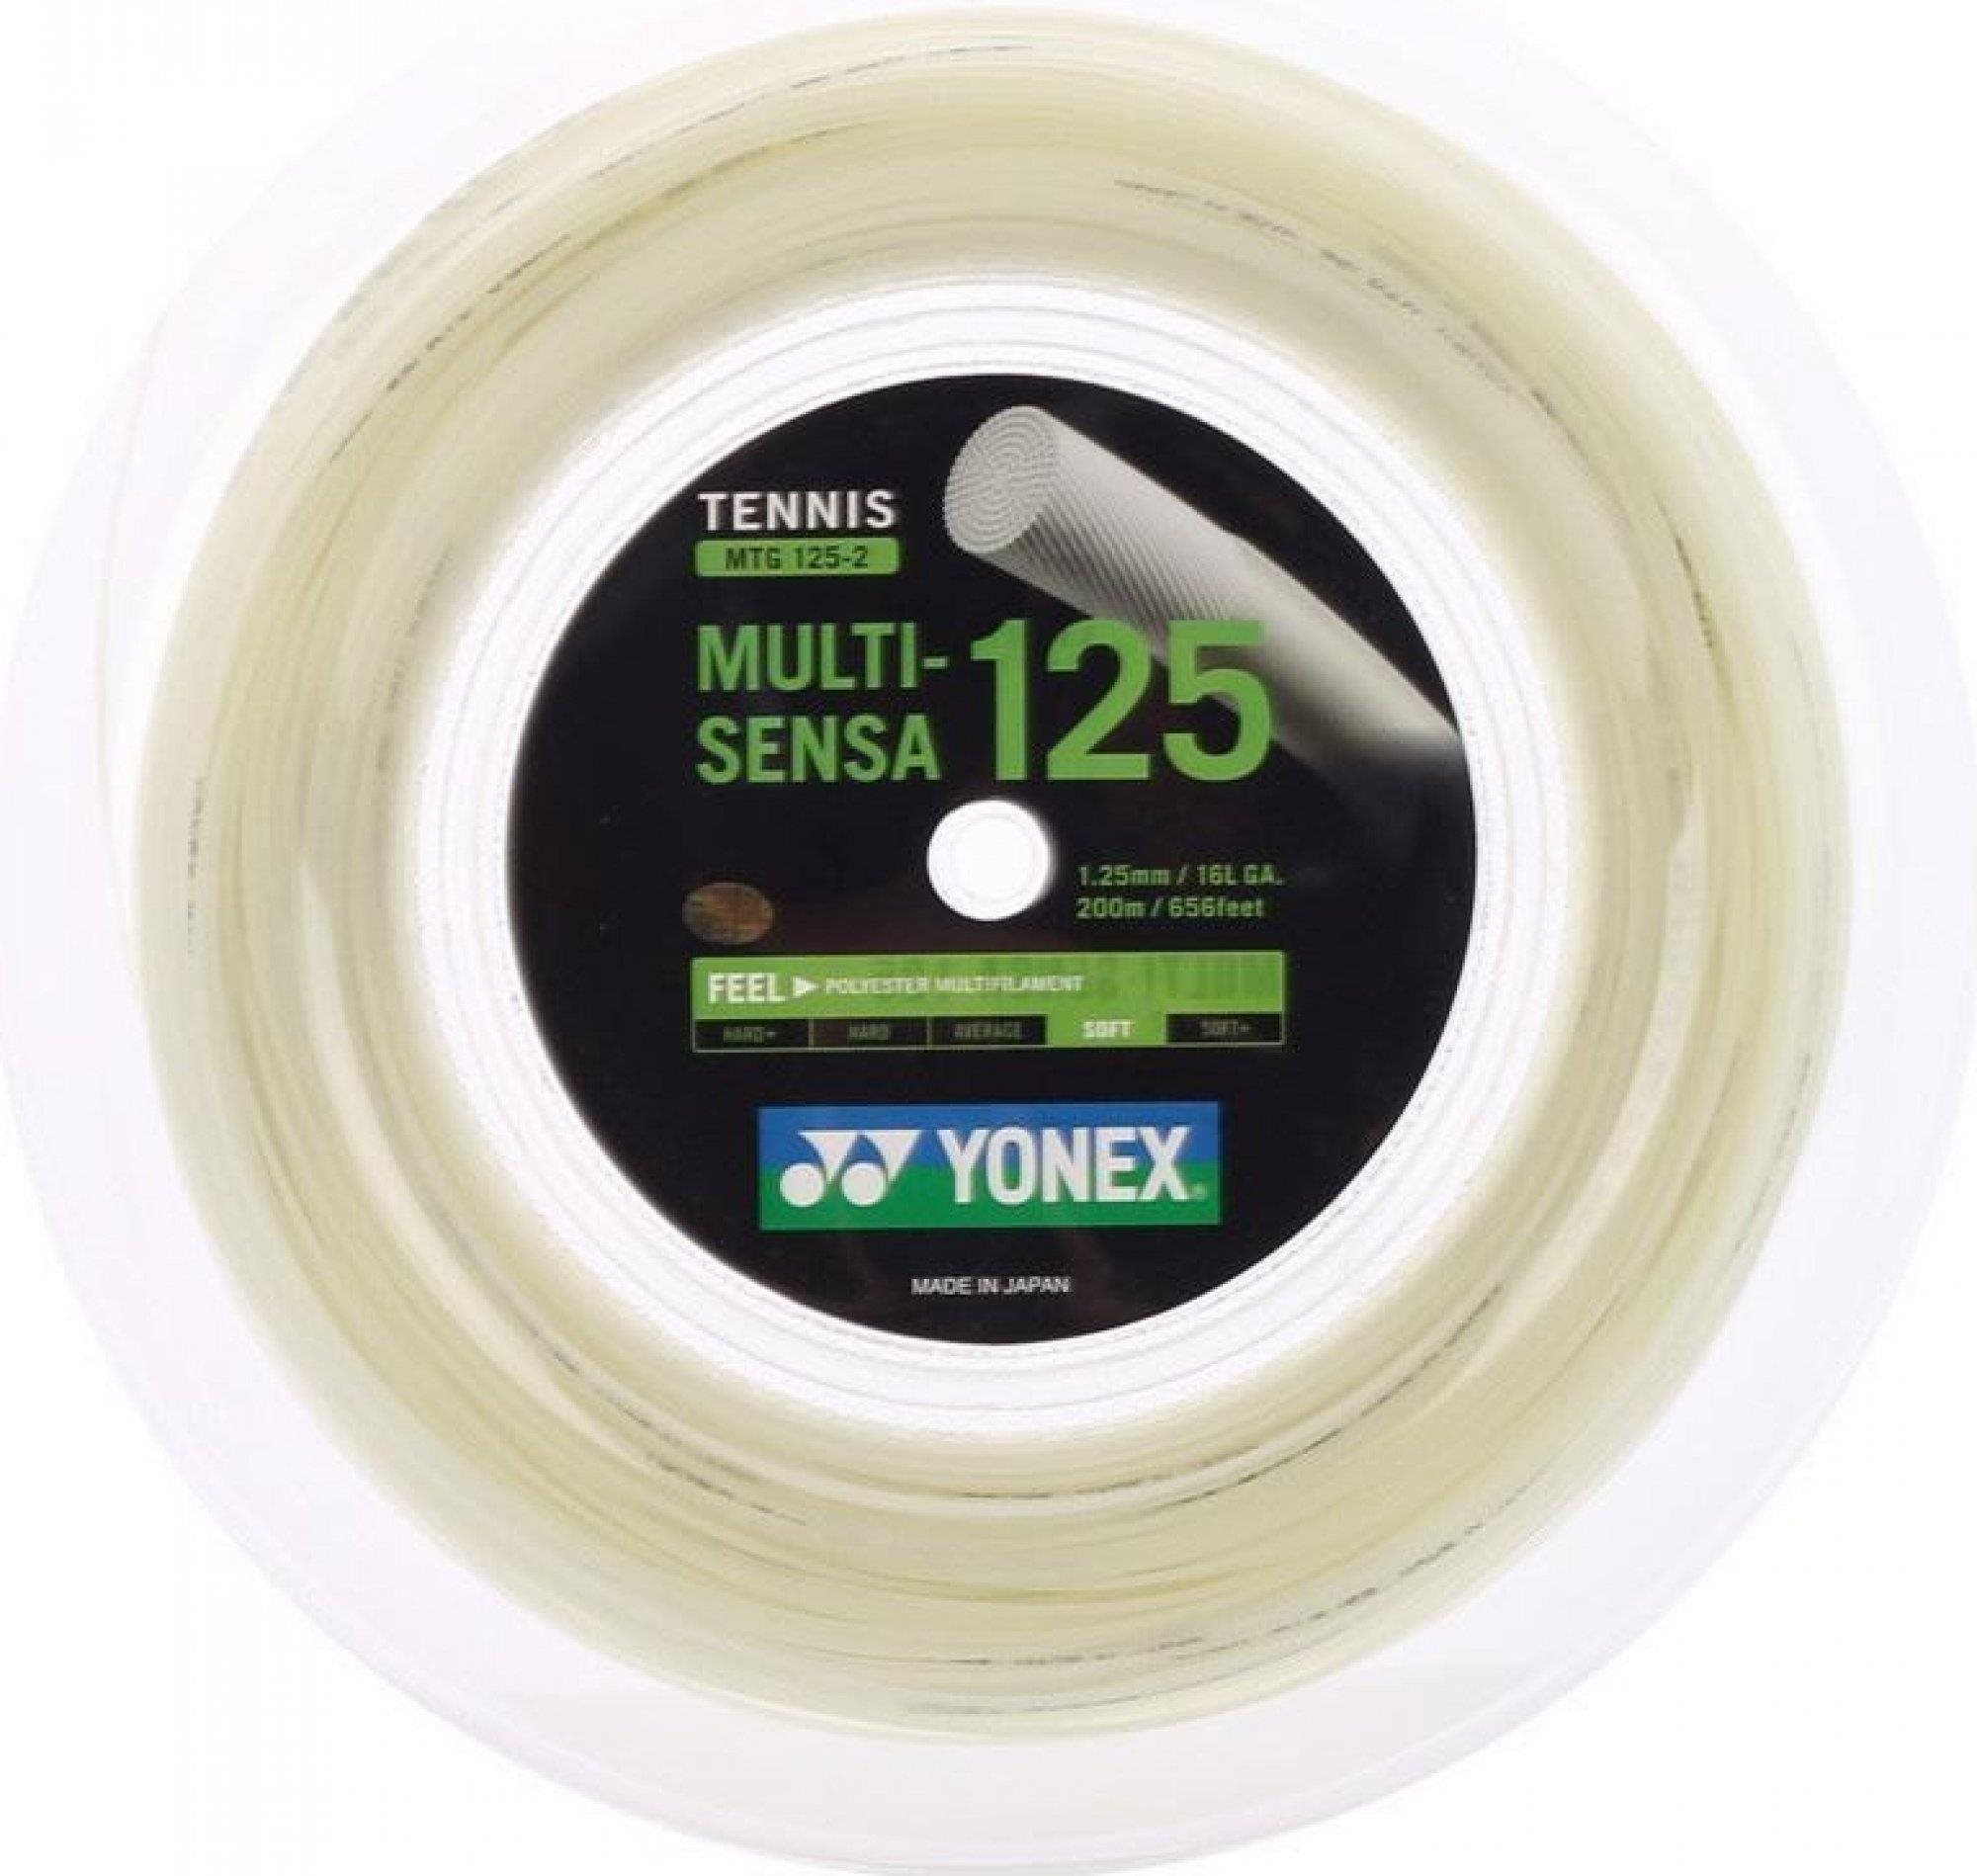 Yonex Multi-Sensa 125, 1,25mm, 200m, fehér